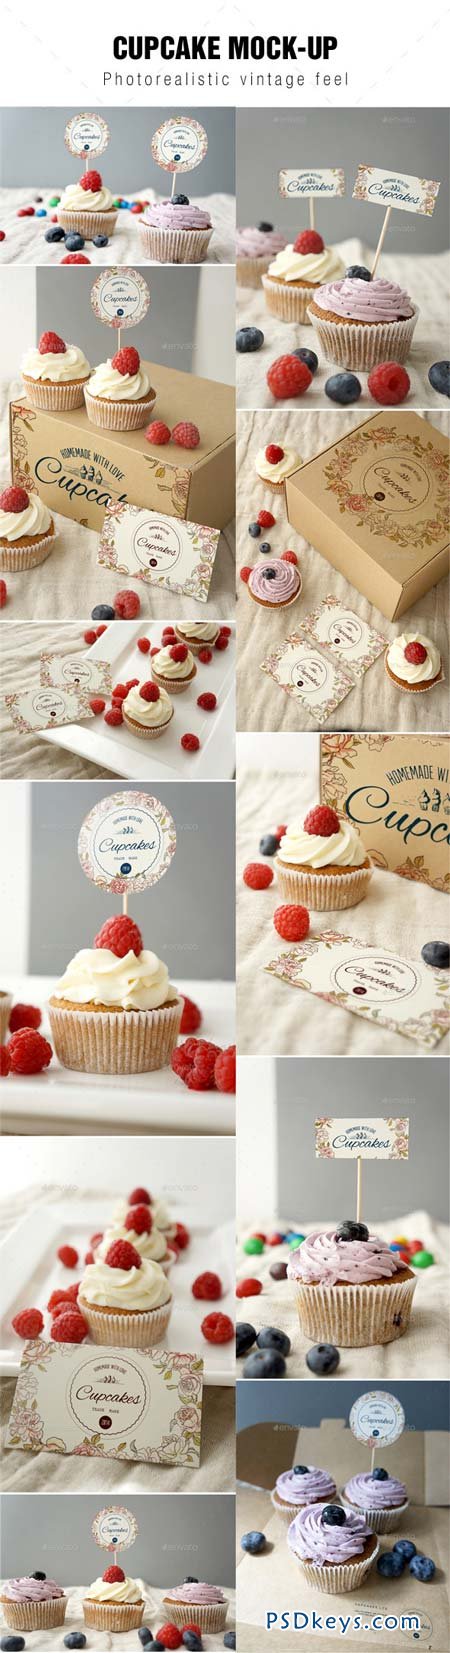 Cupcake Mockup 9206104